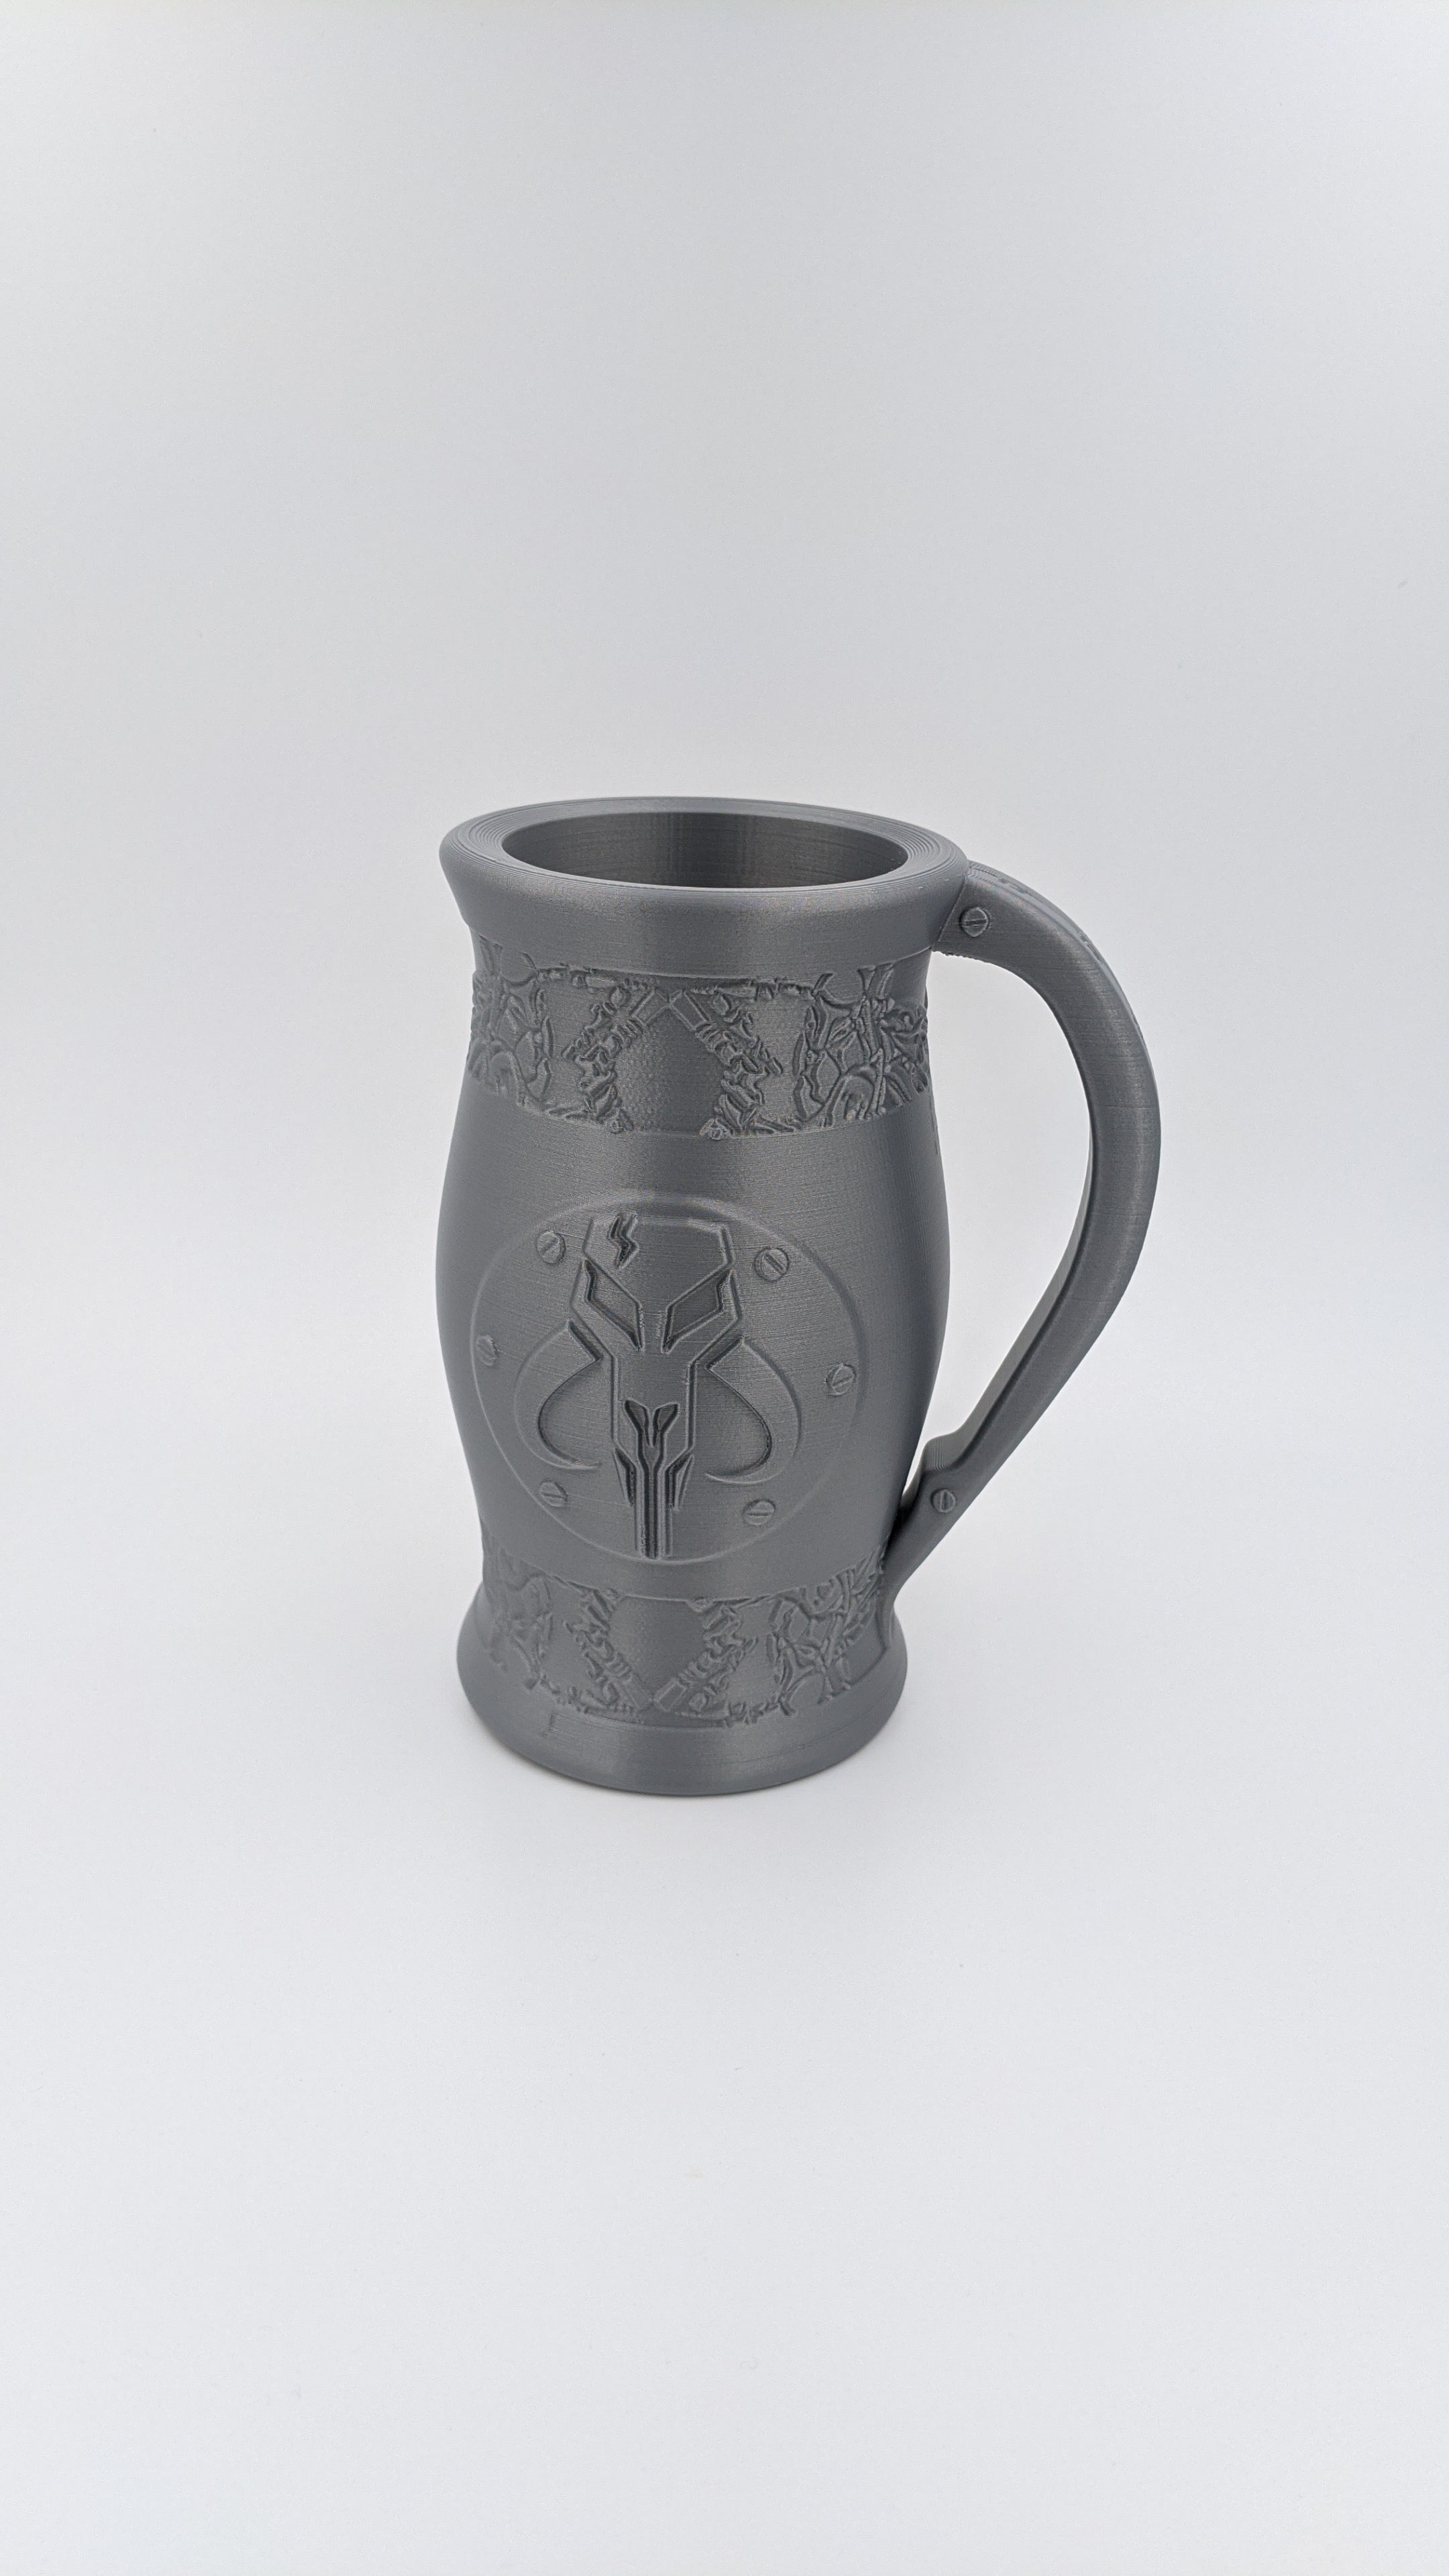 The Mandalorian Can Holder Mug